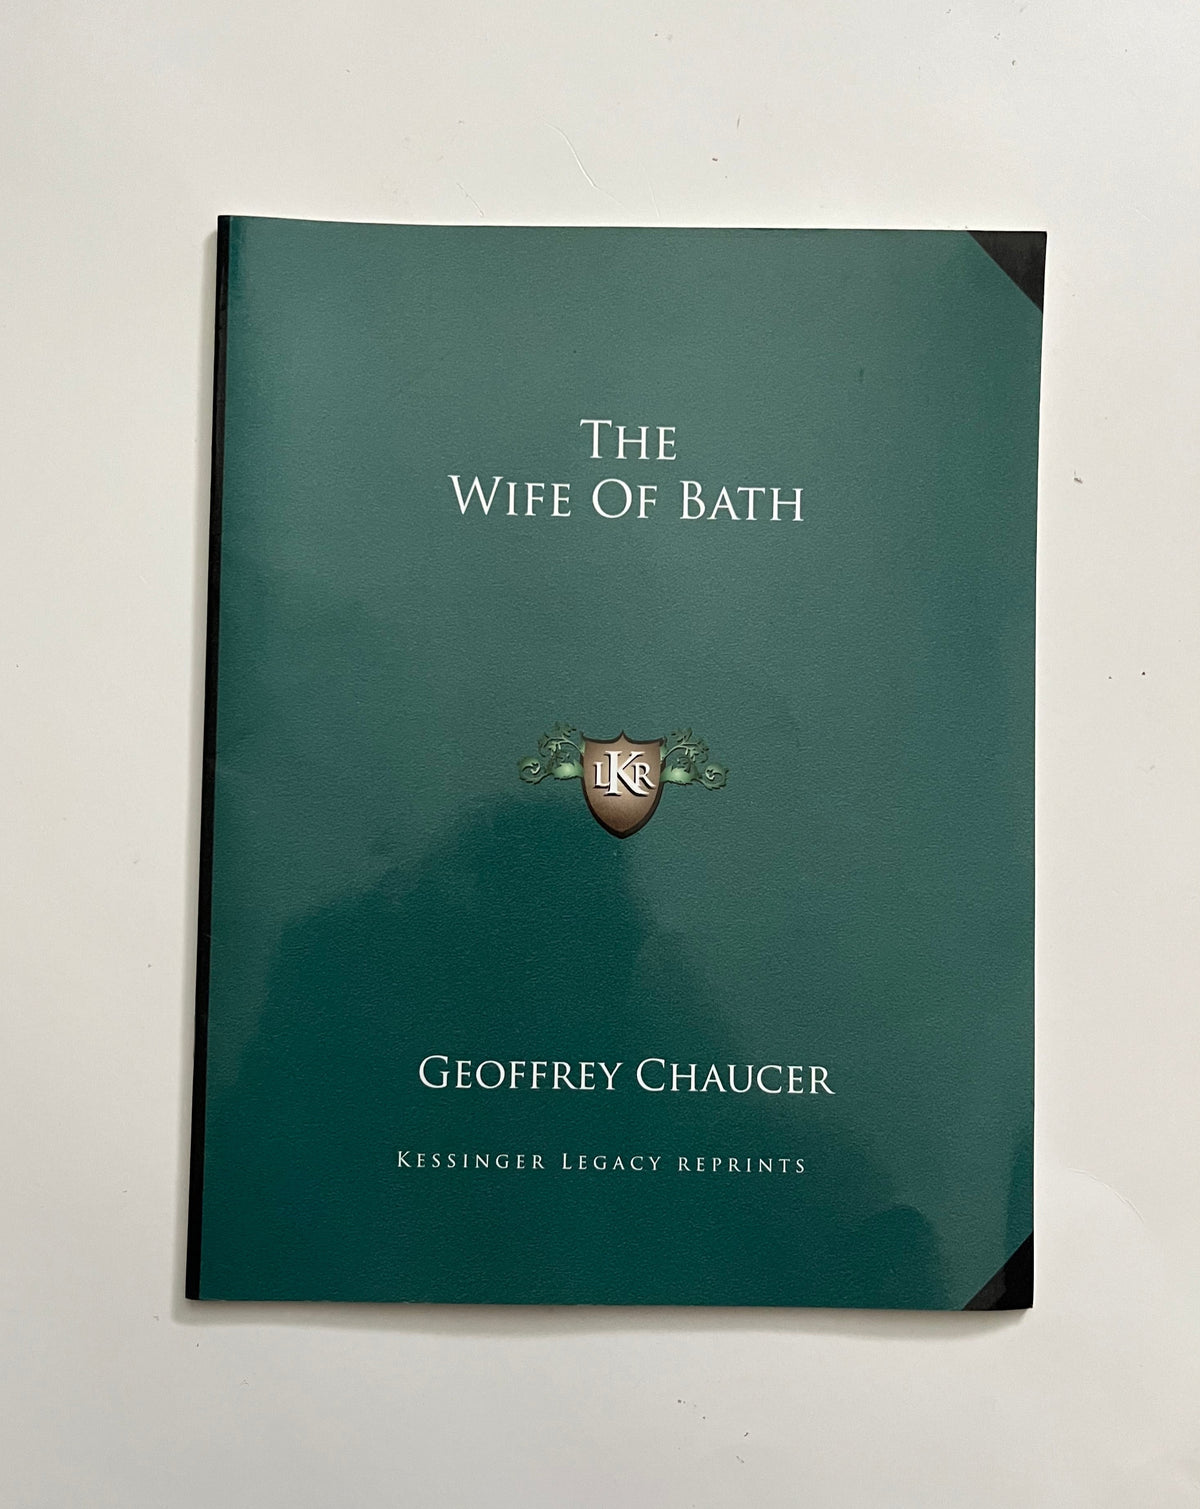 The Wife of Bath by Geoffrey Chaucer